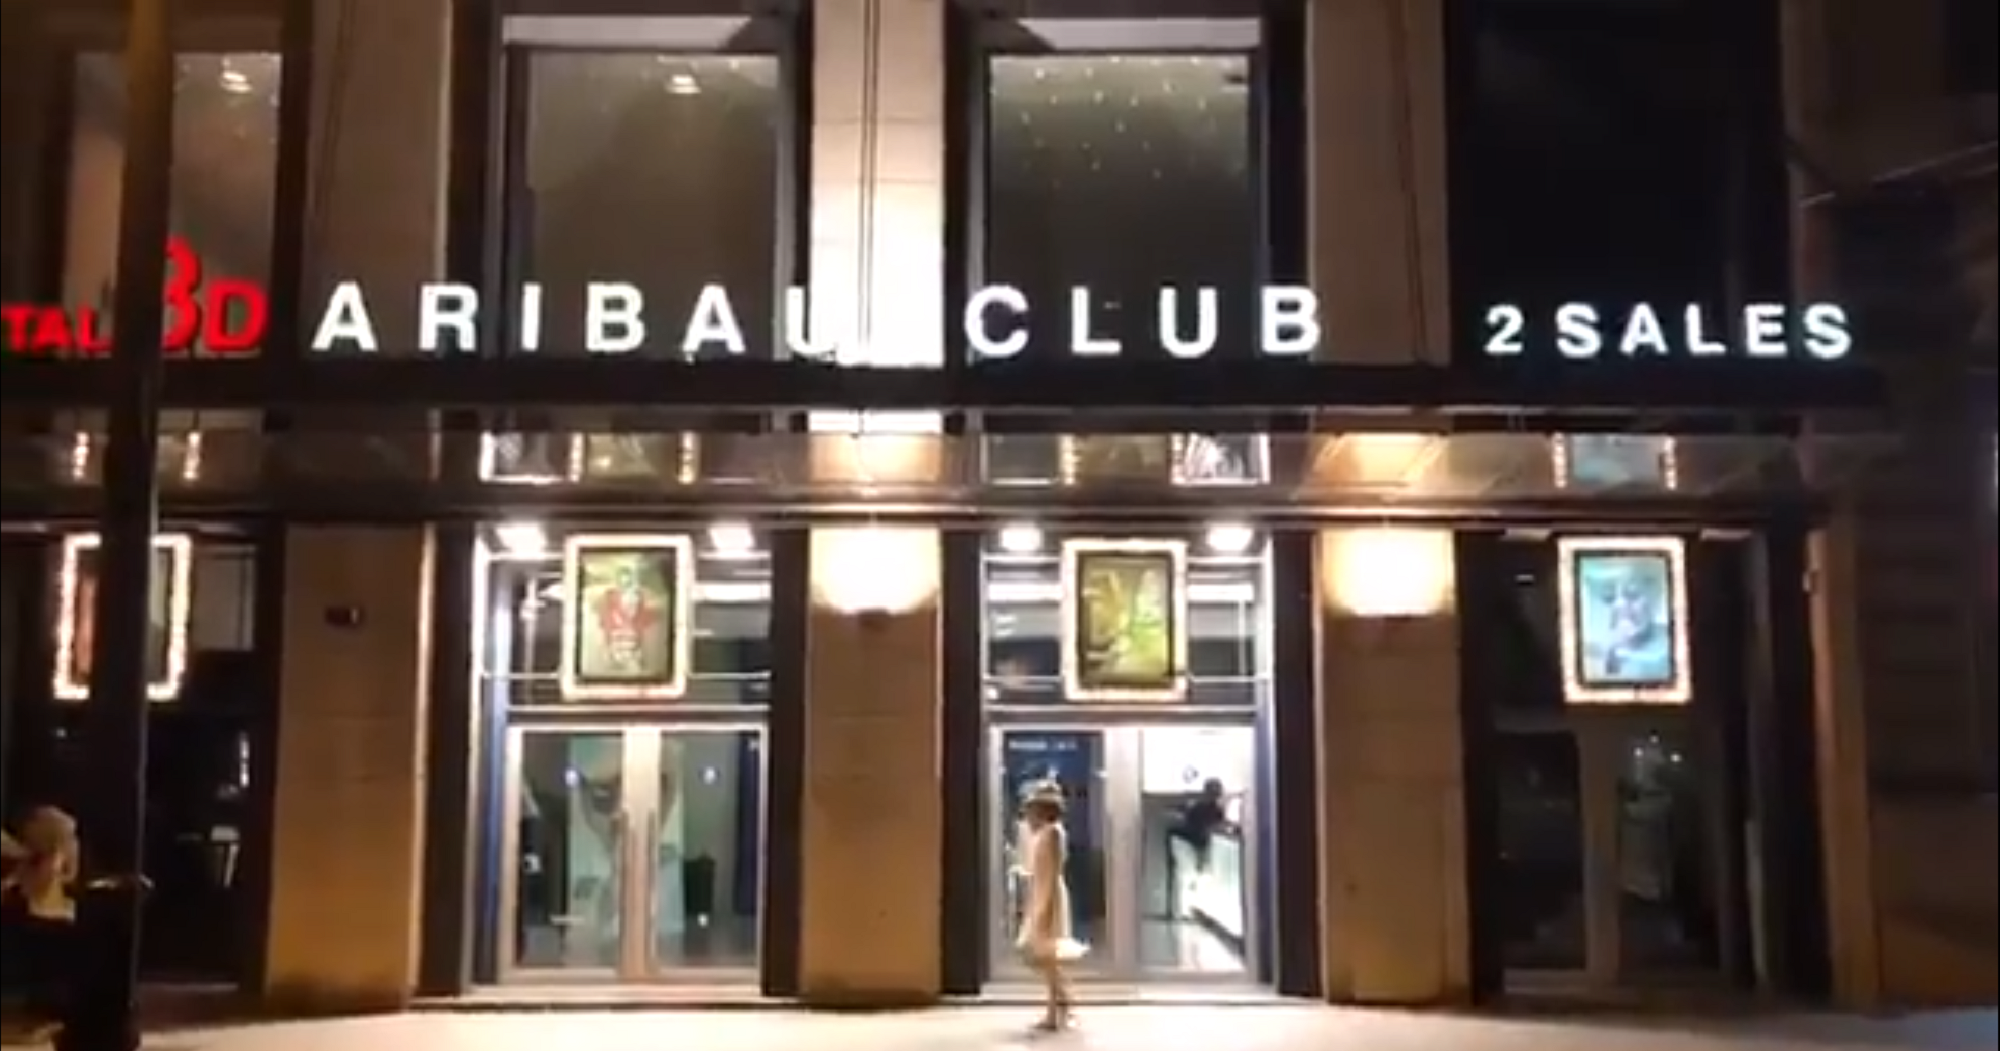 L'històric cinema Aribau Club de Barcelona s'acomiada